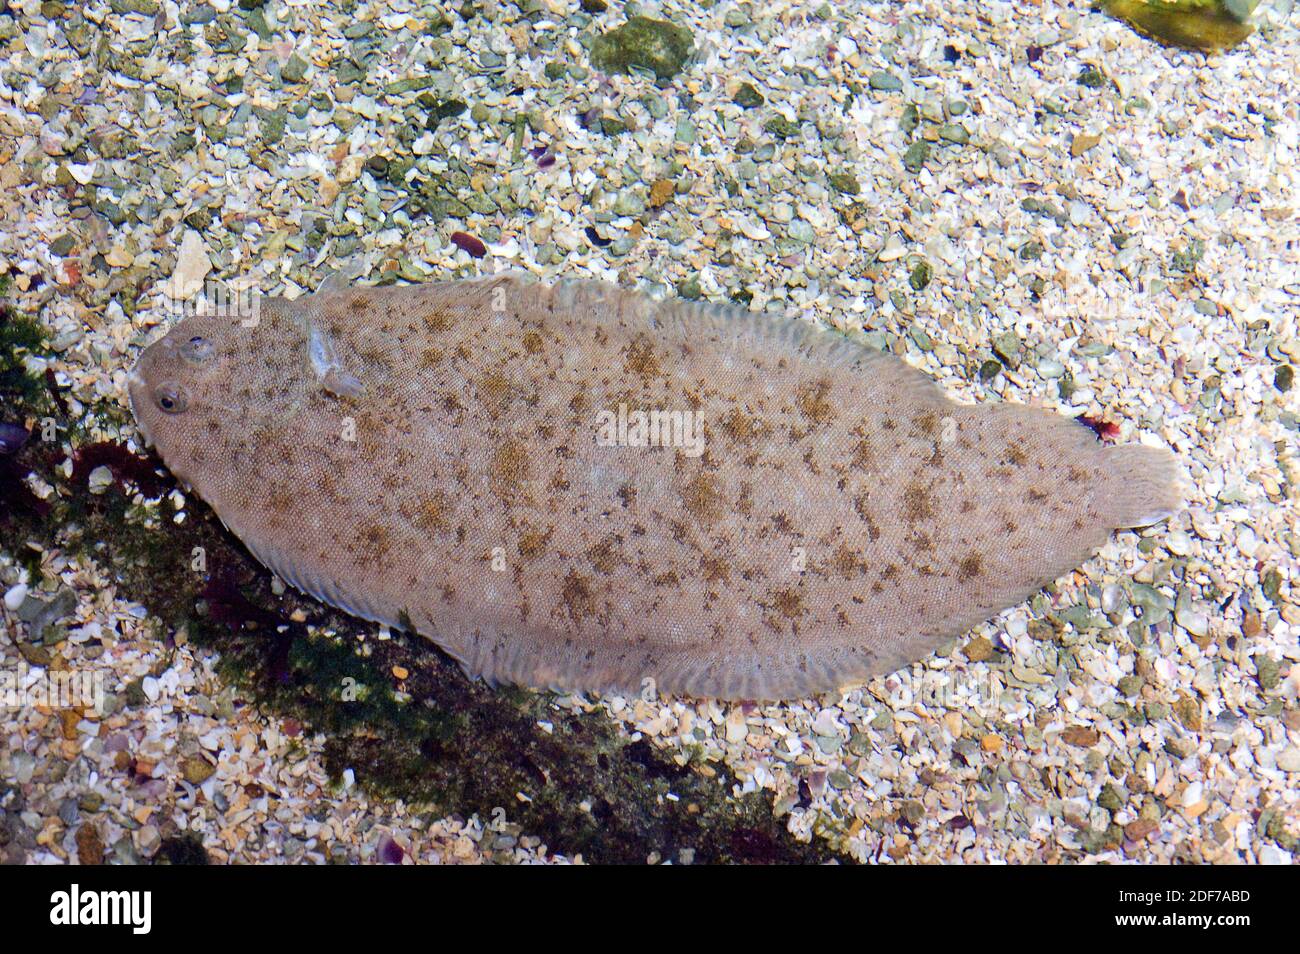 Common sole (Solea solea) is a bentic flat marine fish native to Mediterranean Sea and northern Atlantic coasts. Stock Photo